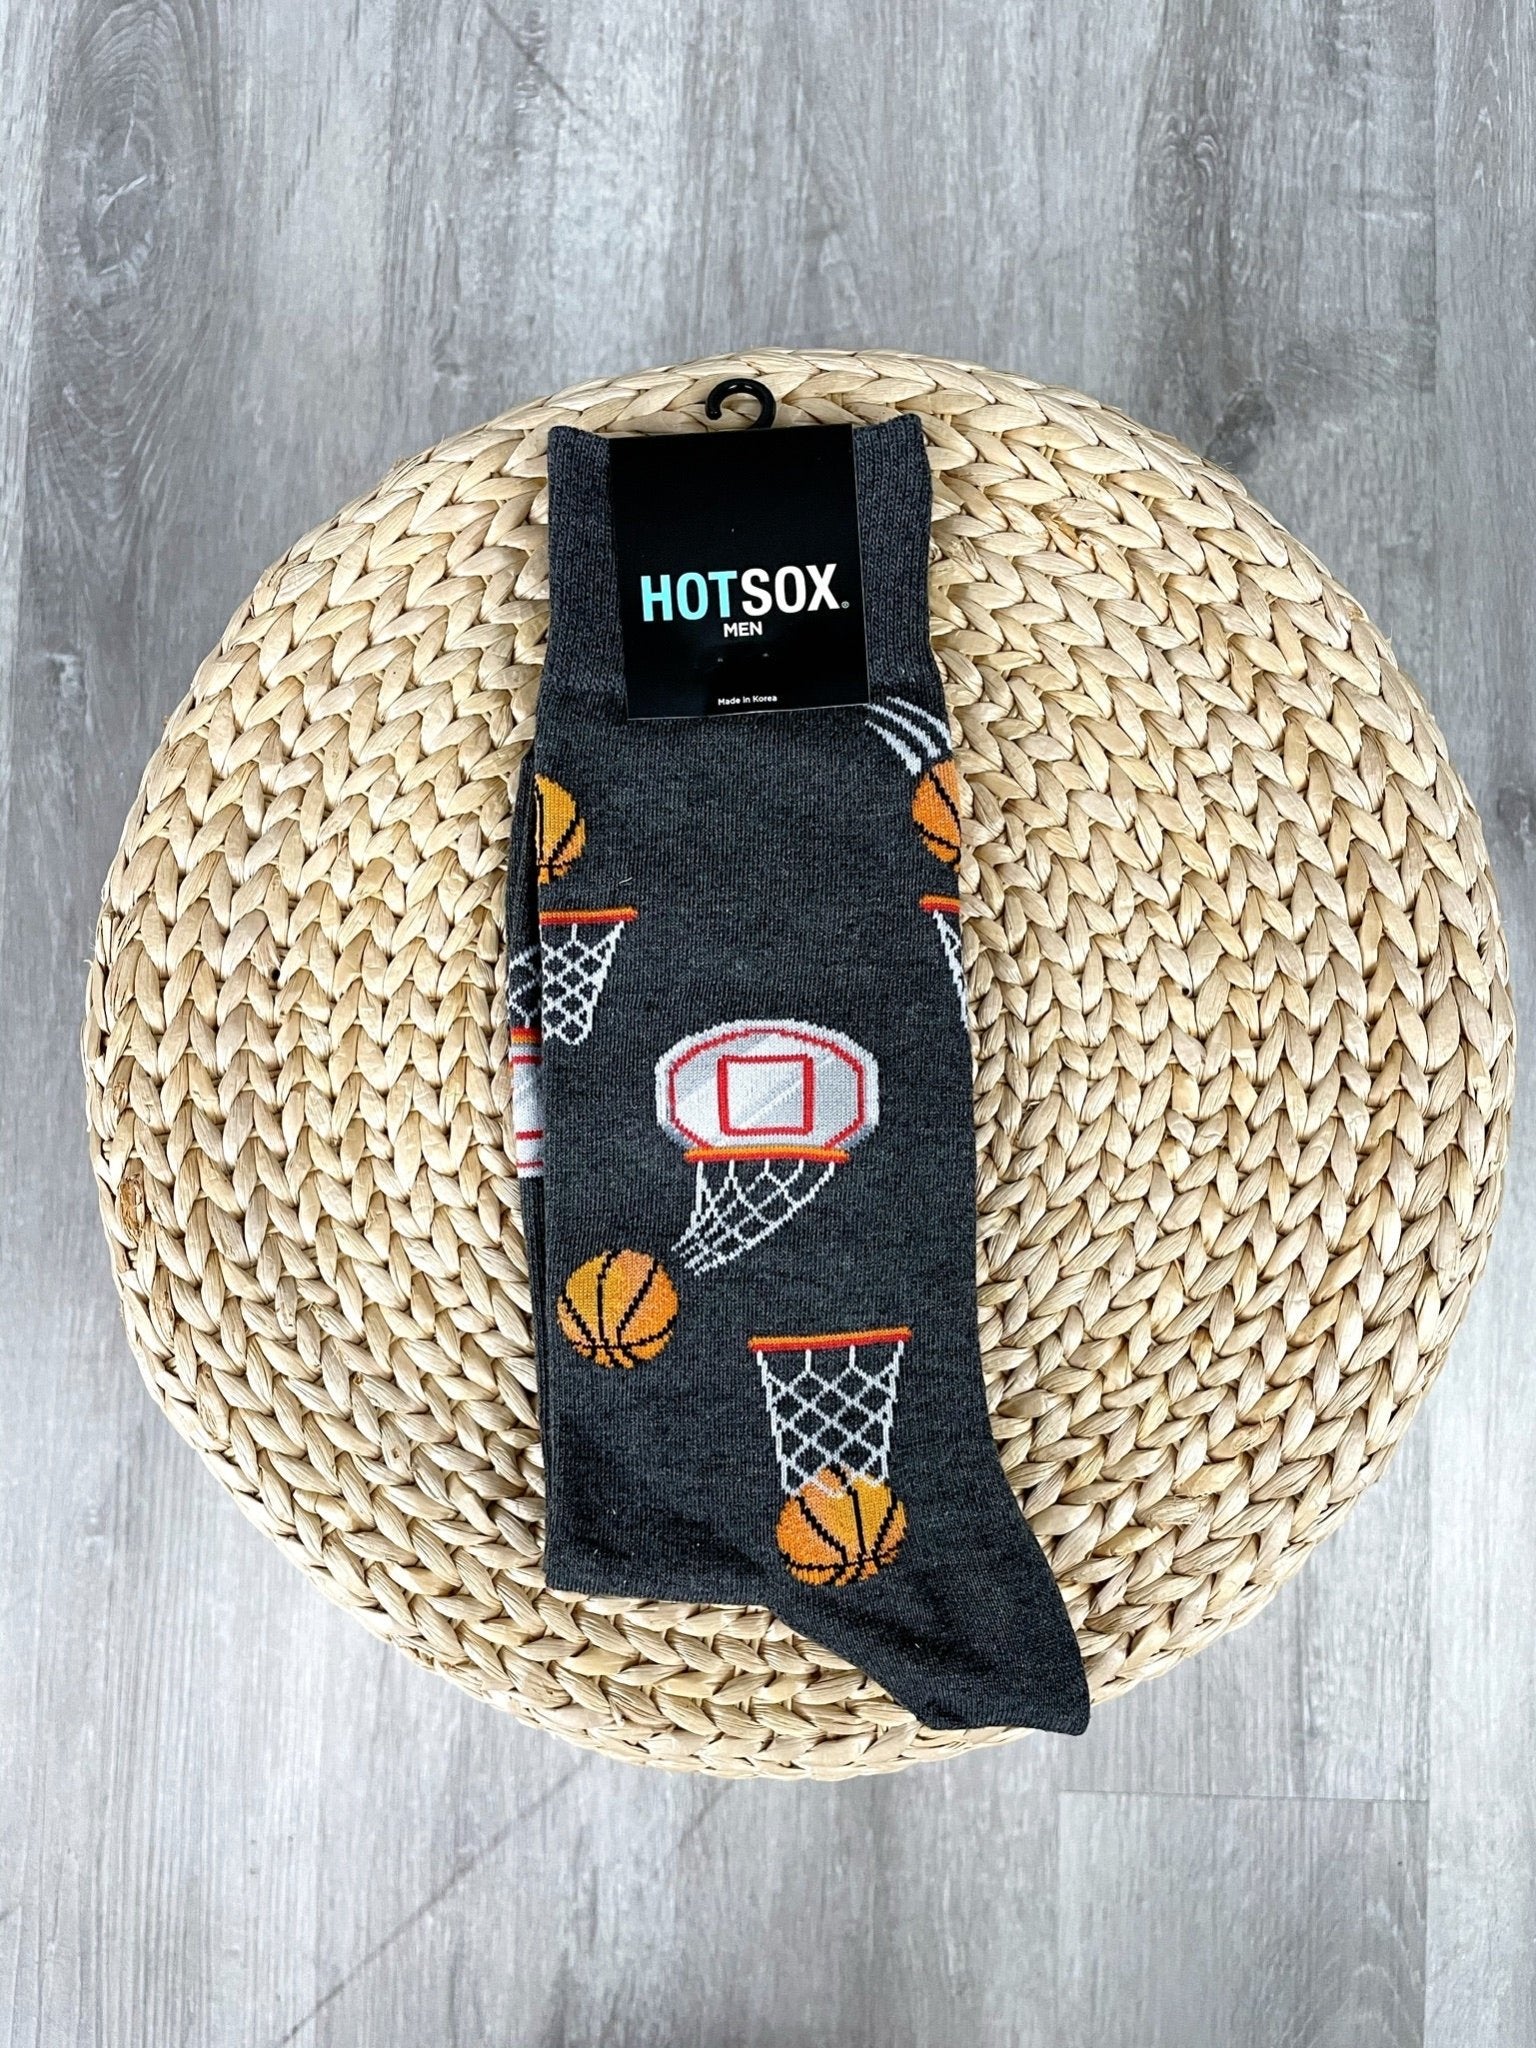 HotSox men's basketball socks - Trendy Socks at Lush Fashion Lounge Boutique in Oklahoma City